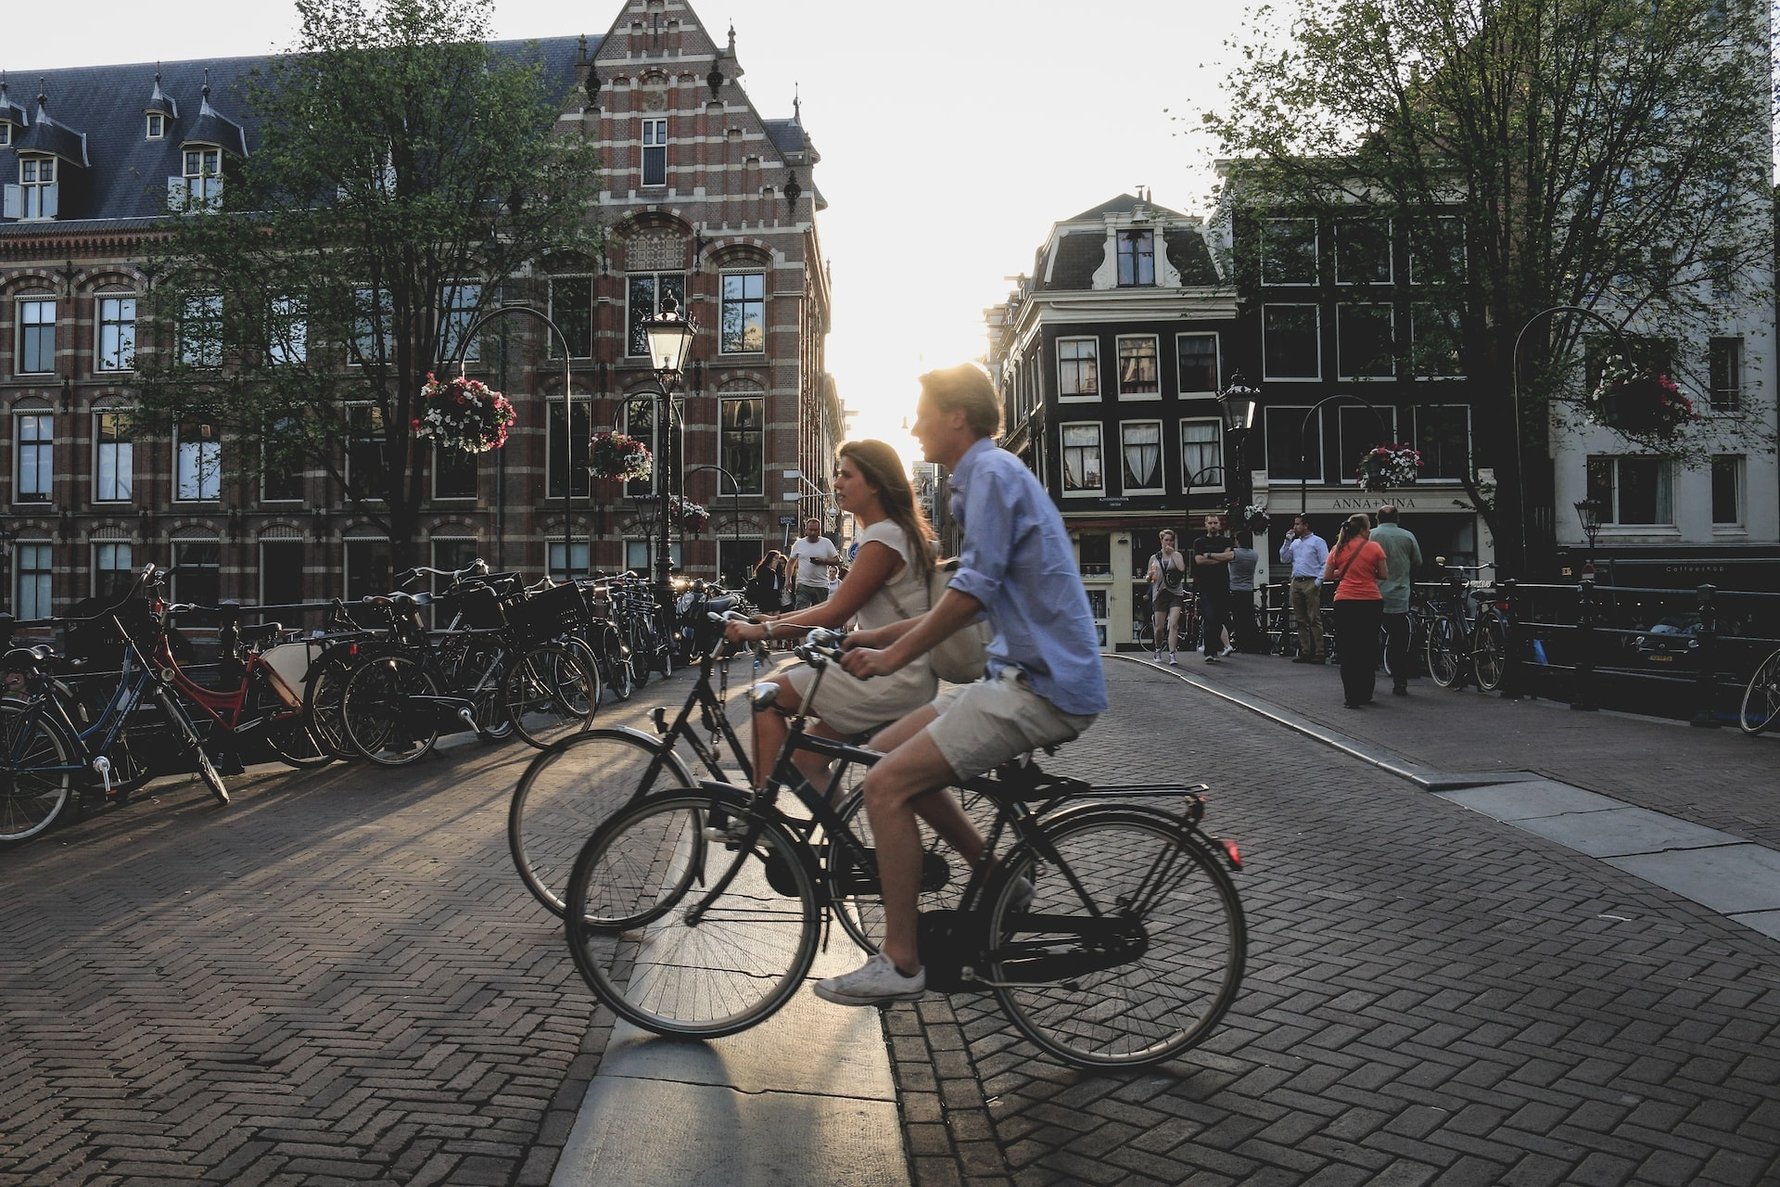 Romantic Places to Visit in Amsterdam - Bike Ride © sabina-fratila-unsplash